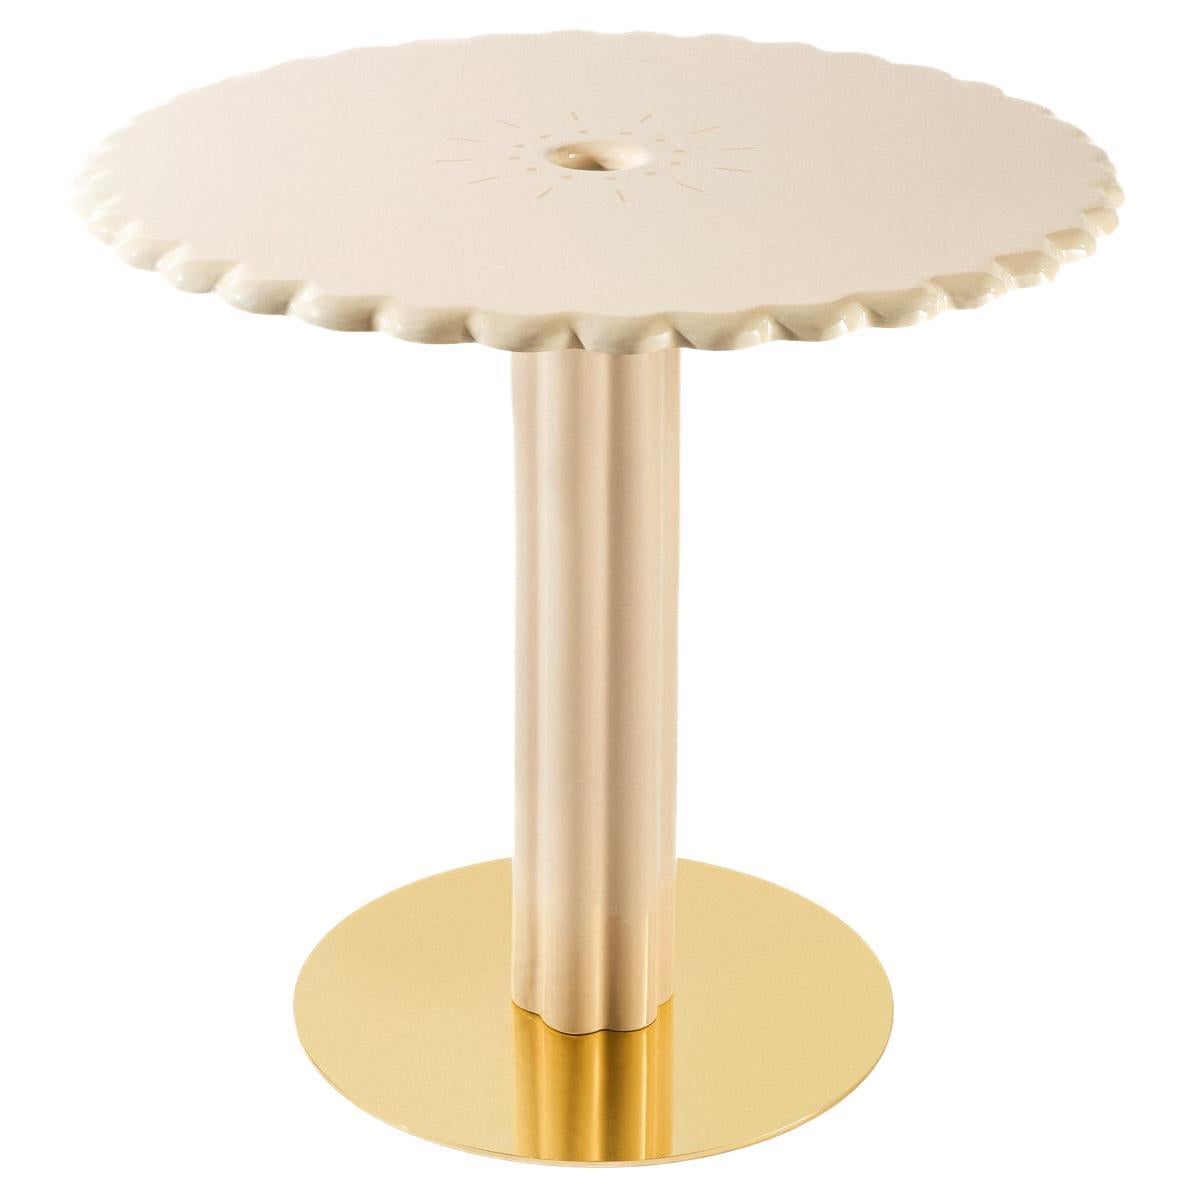 ‘Patisserie’ Lavastone & Ceramic table by Studio Yellowdot For Sale